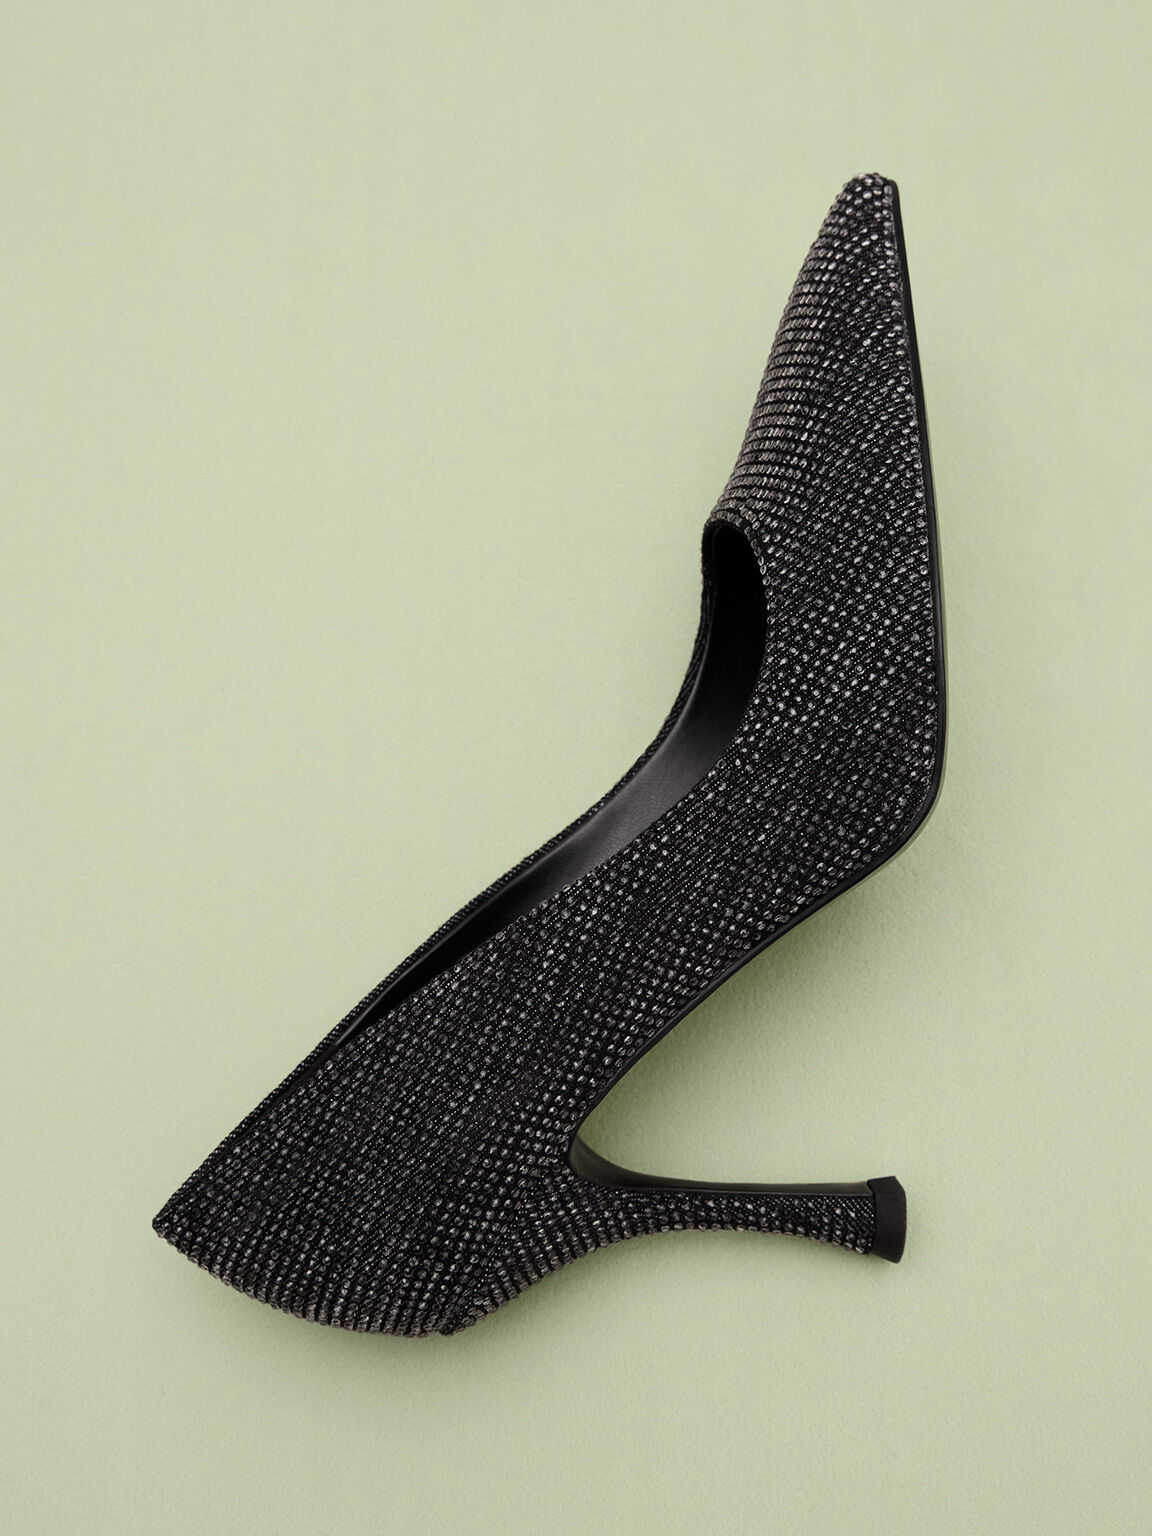 Denim Pointed-Toe Spool-Heel Pumps, Black Textured, hi-res